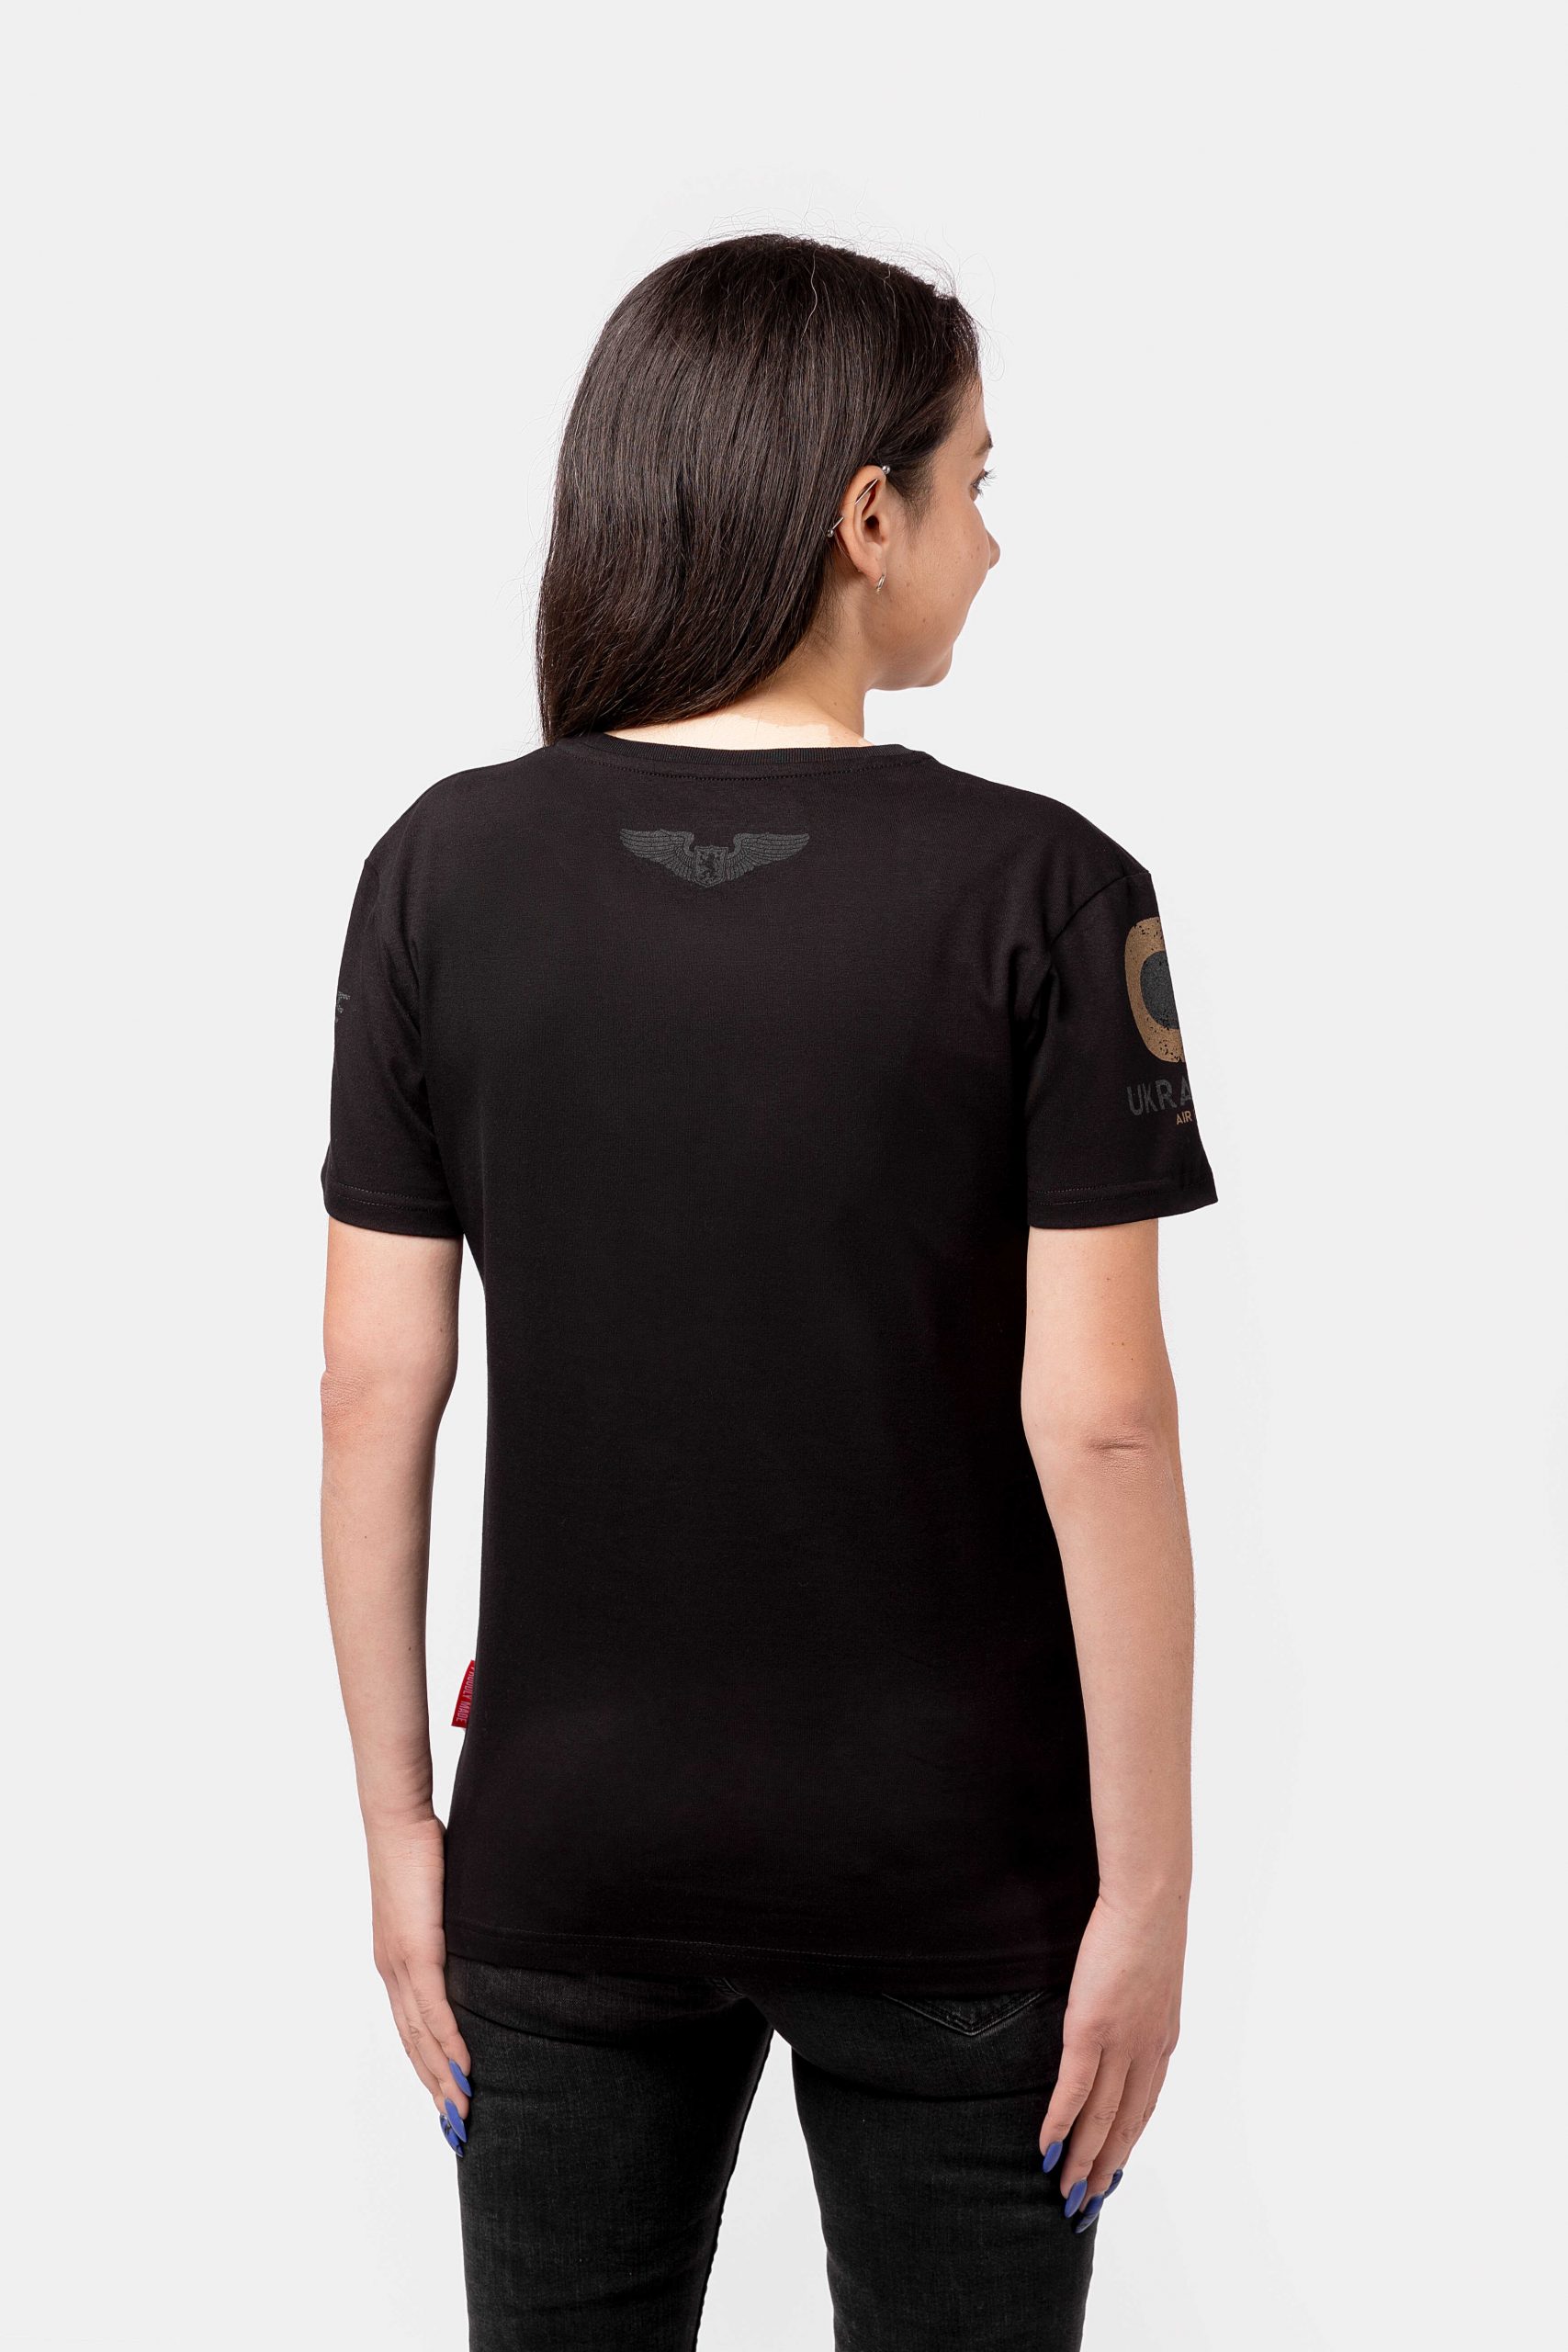 Women's T-Shirt 204 Brigade. Color black. 1.